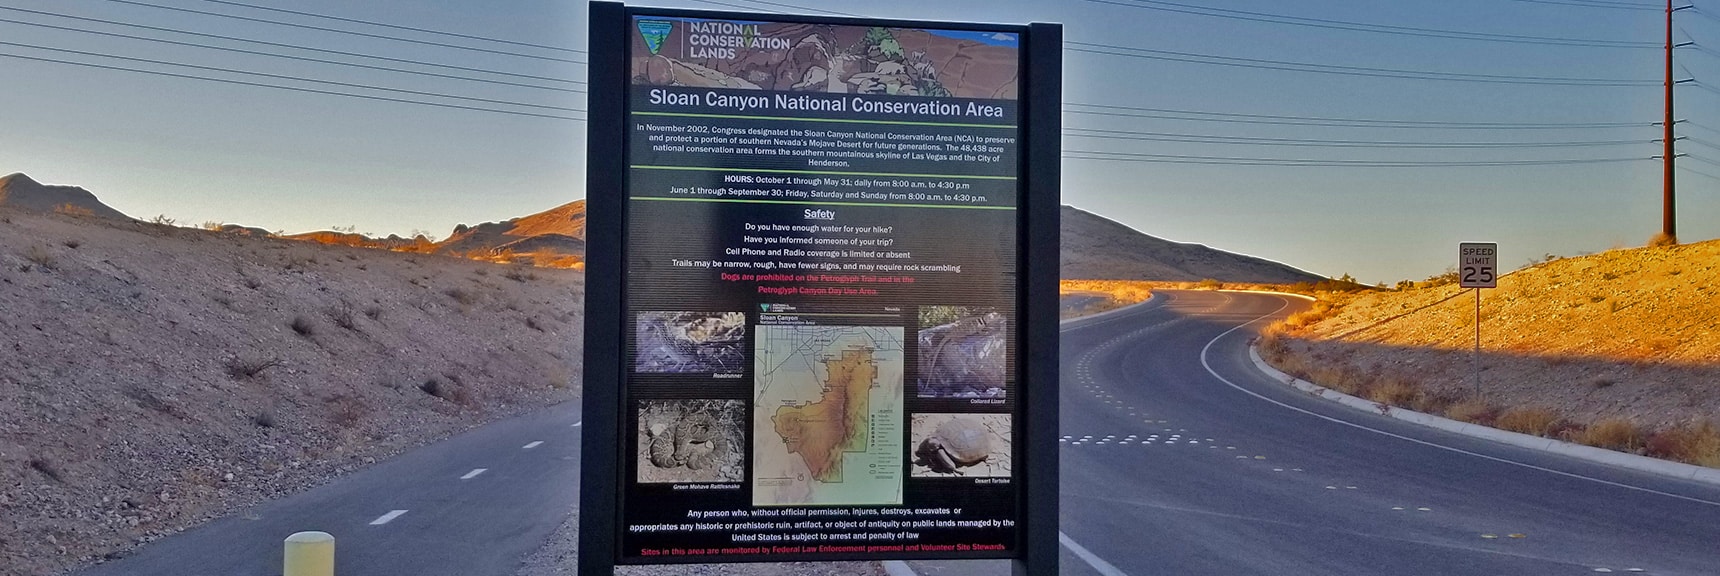 Petroglyph Canyon Interpretive Sign at Entrance| Petroglyph Canyon | Sloan Canyon National Conservation Area, Nevada